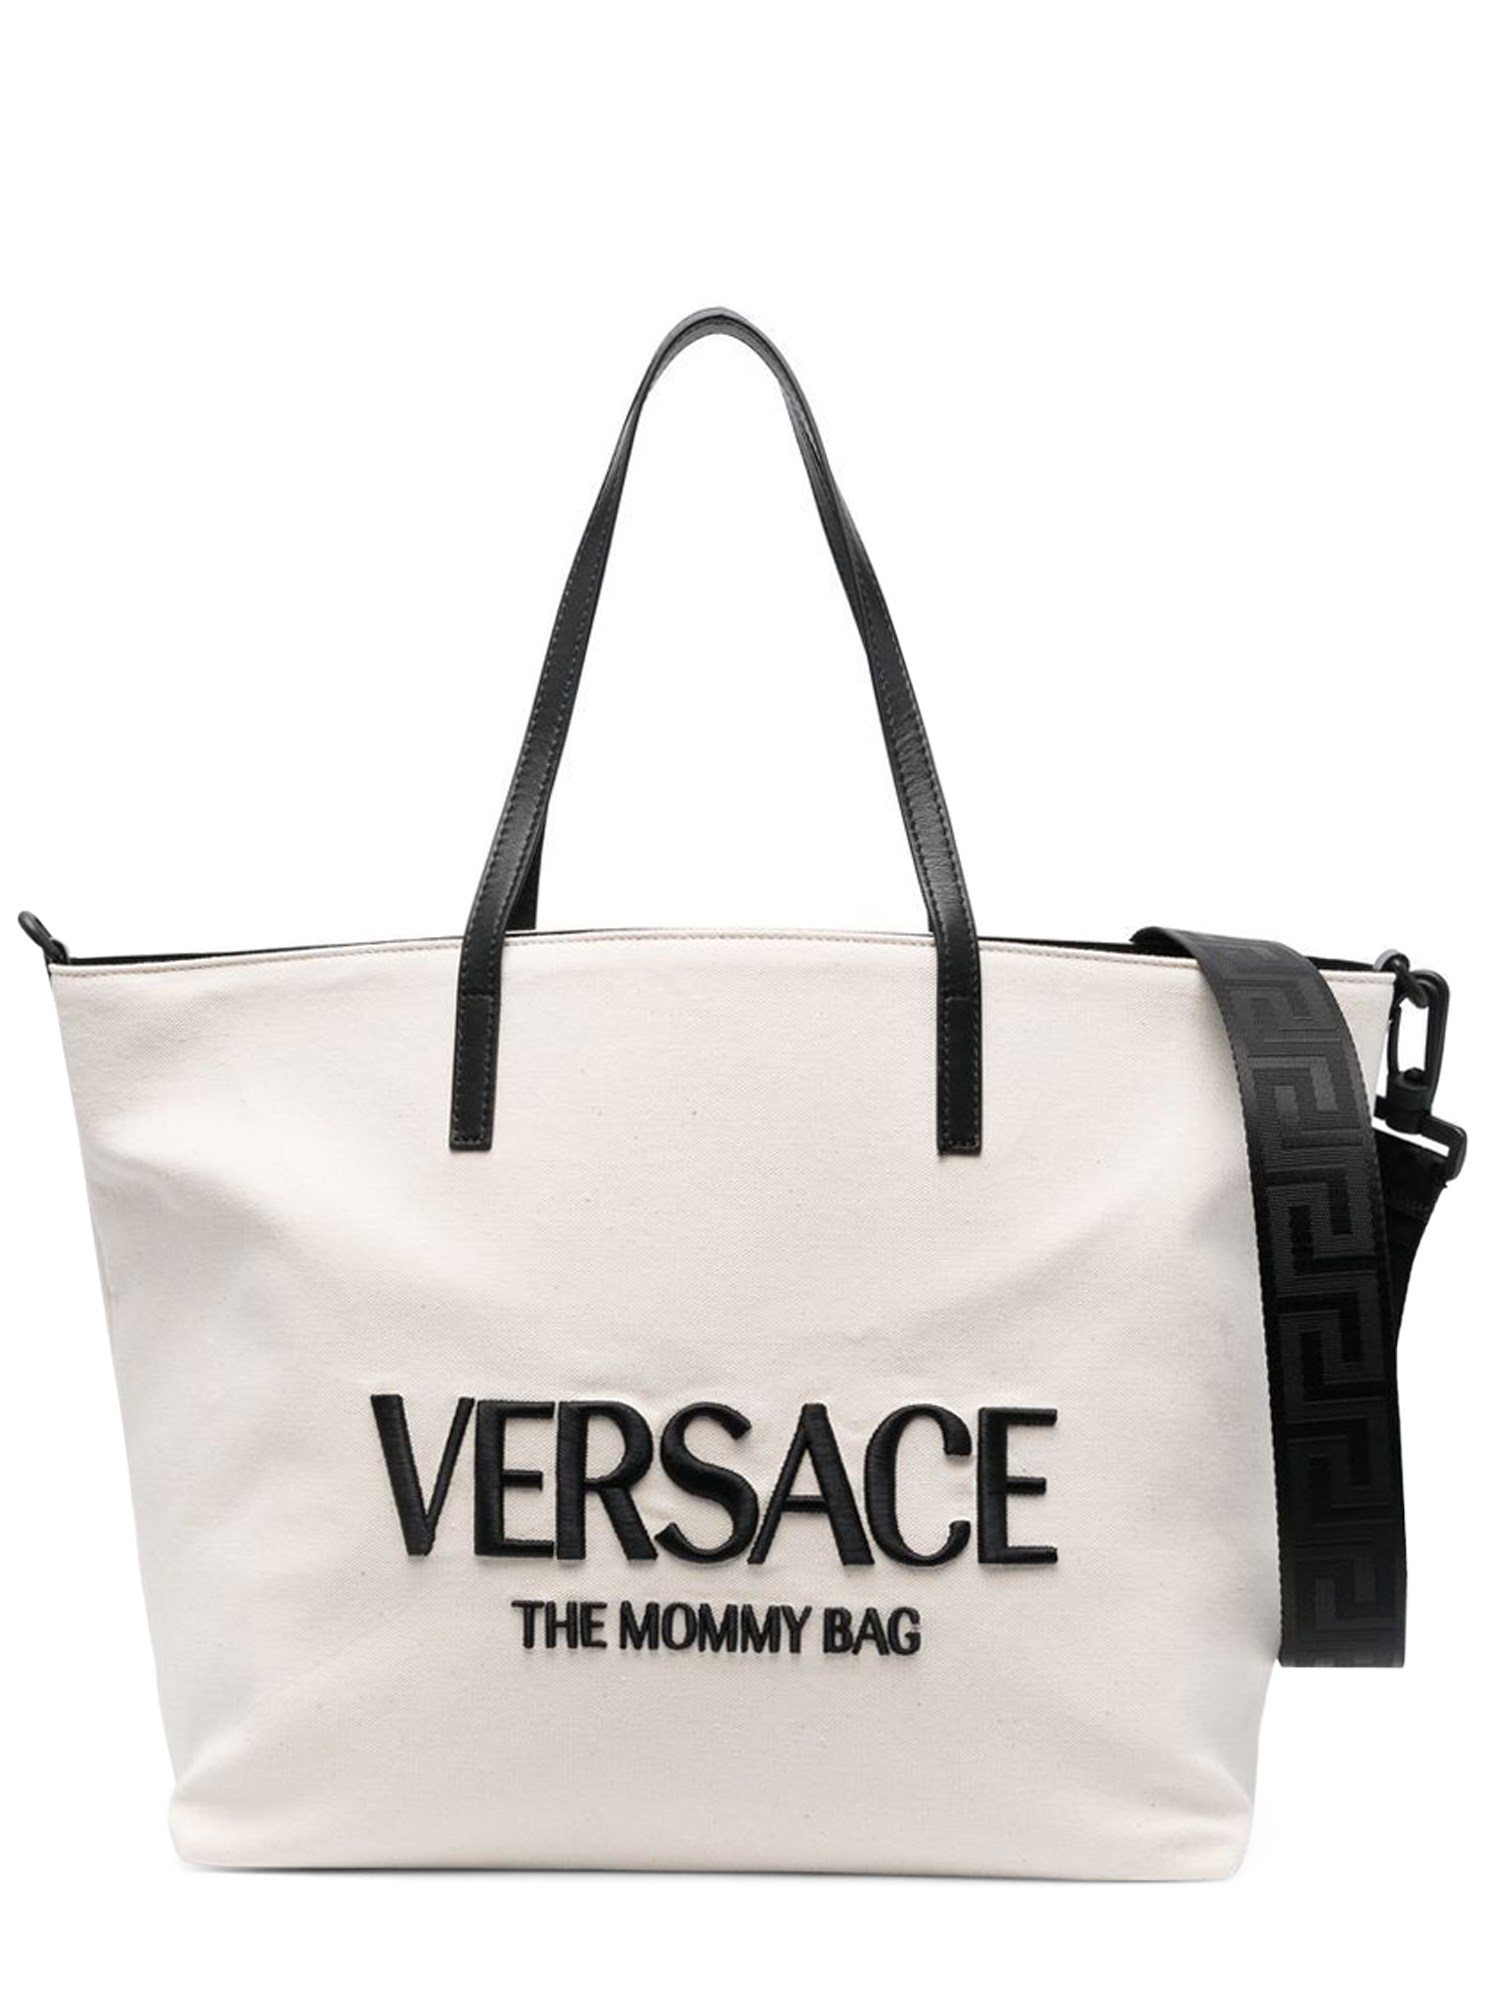 Versace versace mommy bag